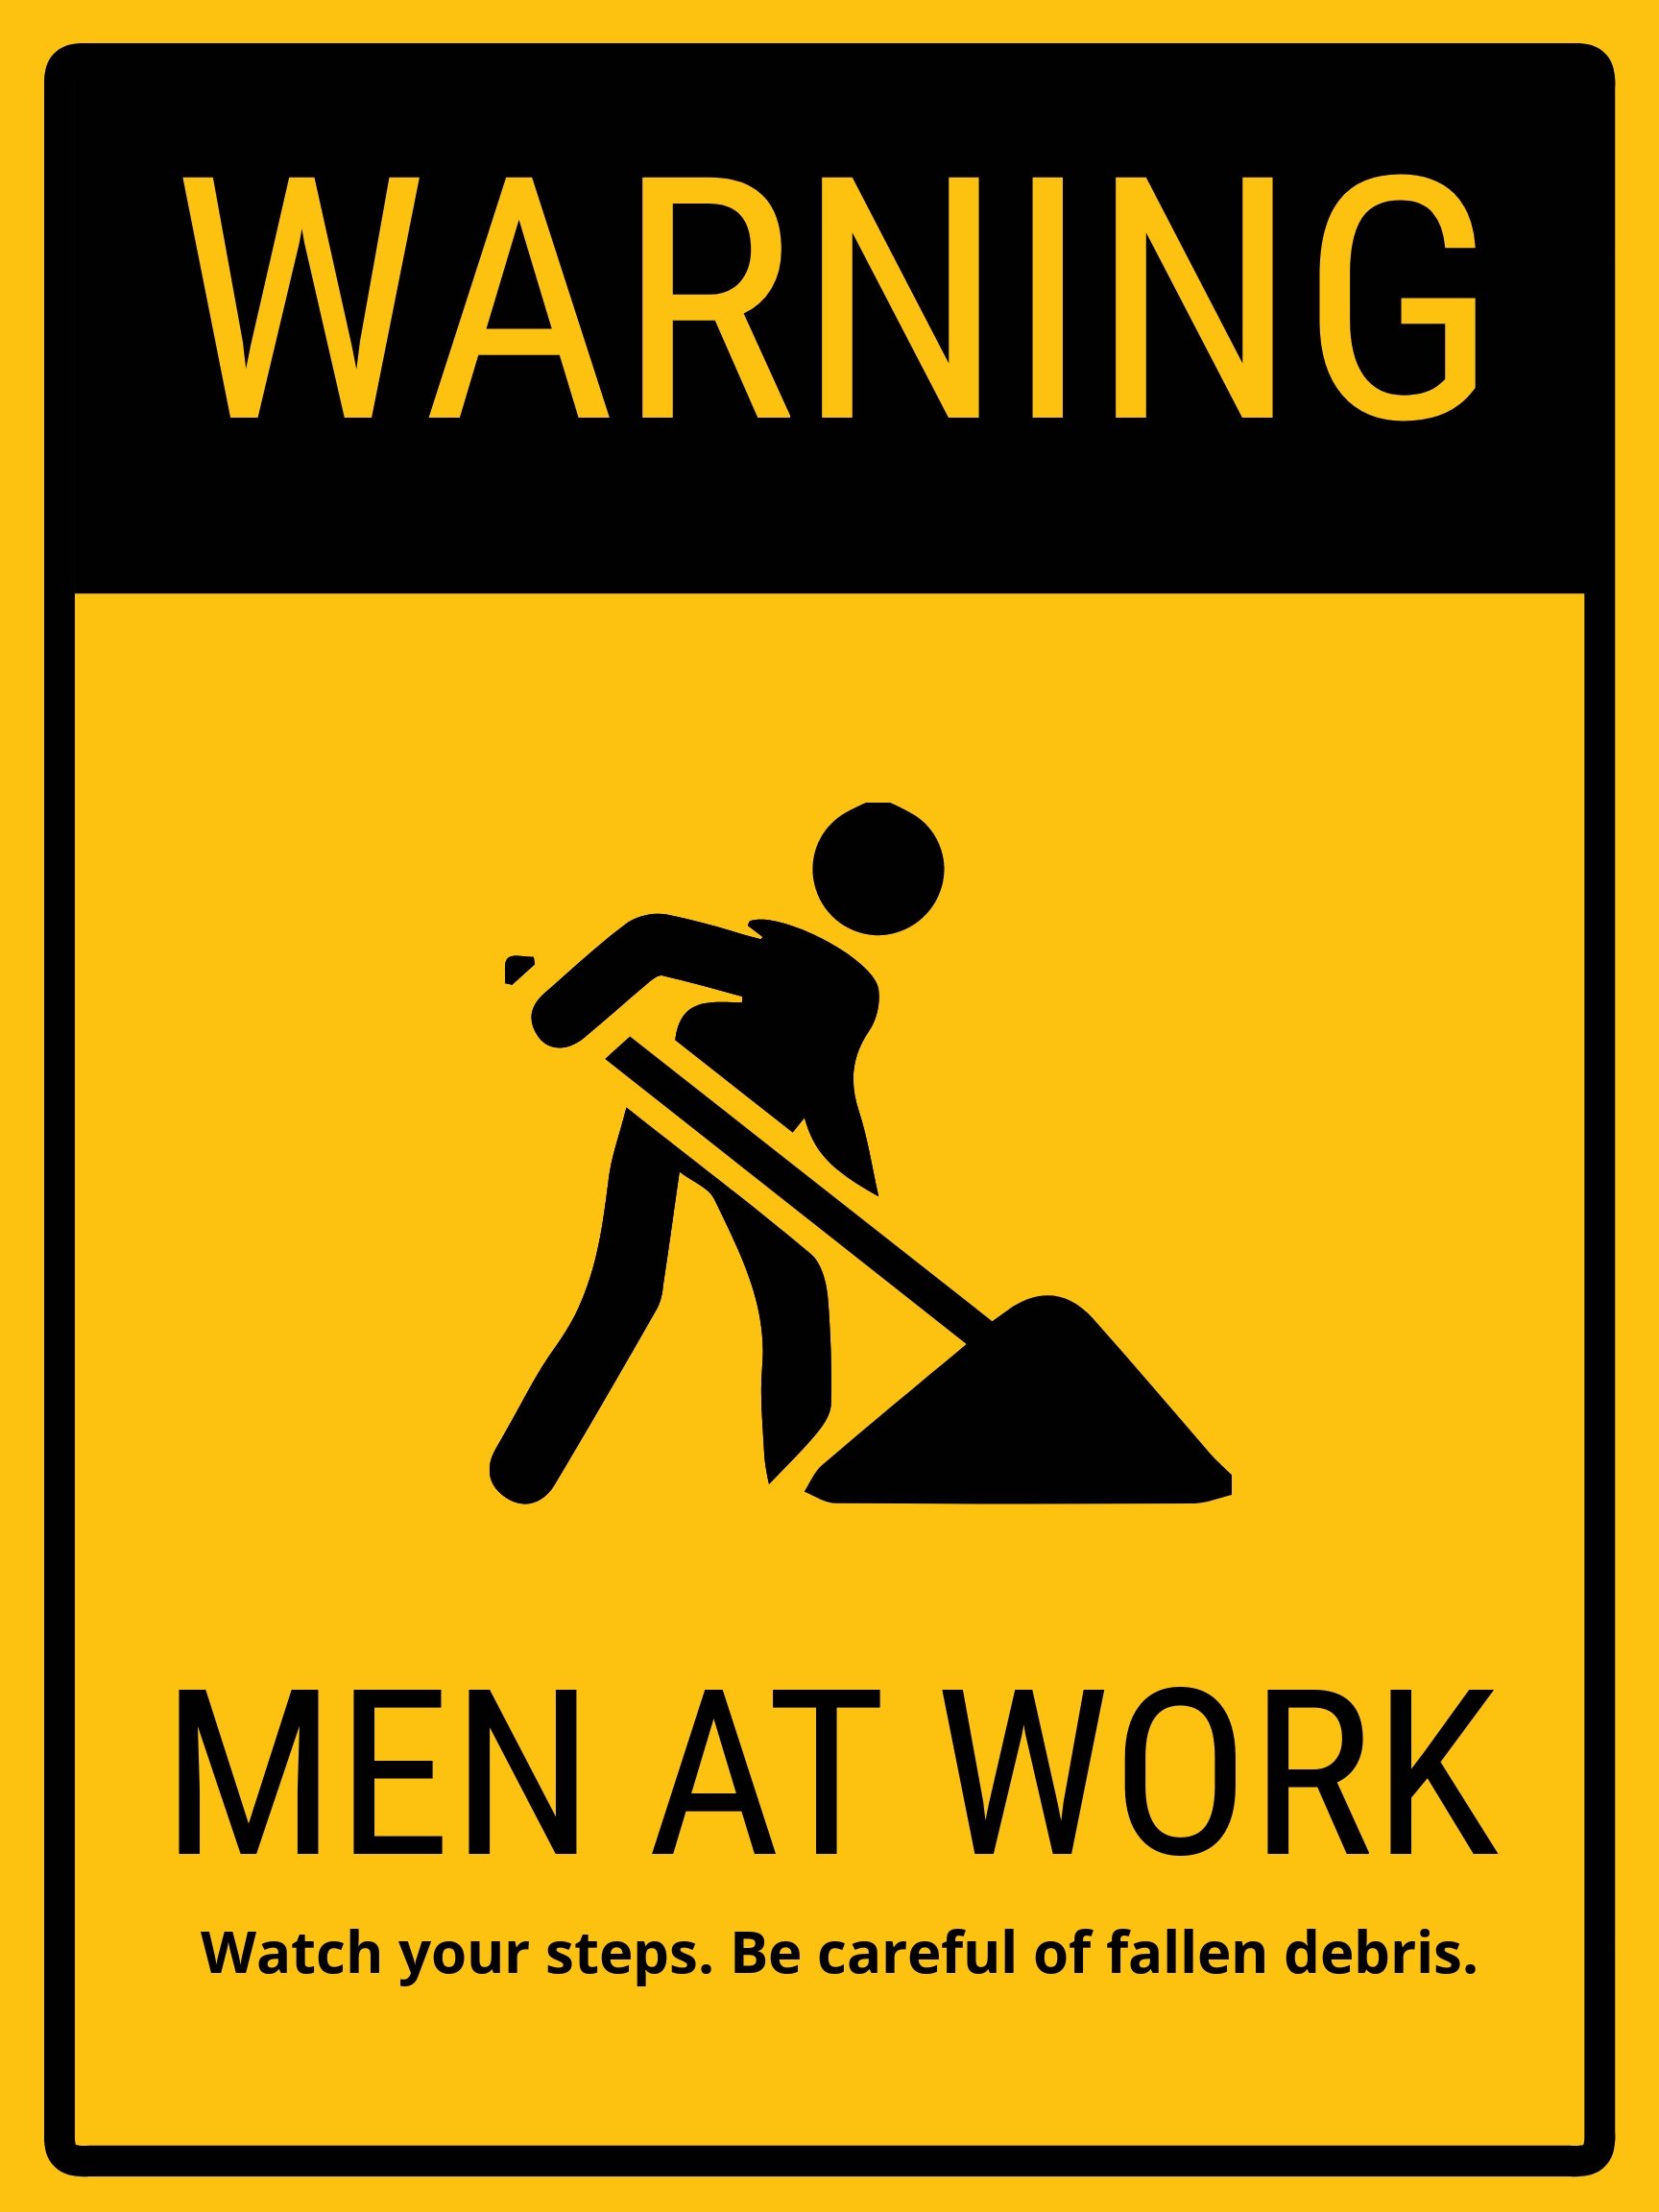 Warning Men at Work Sign Template.jpe